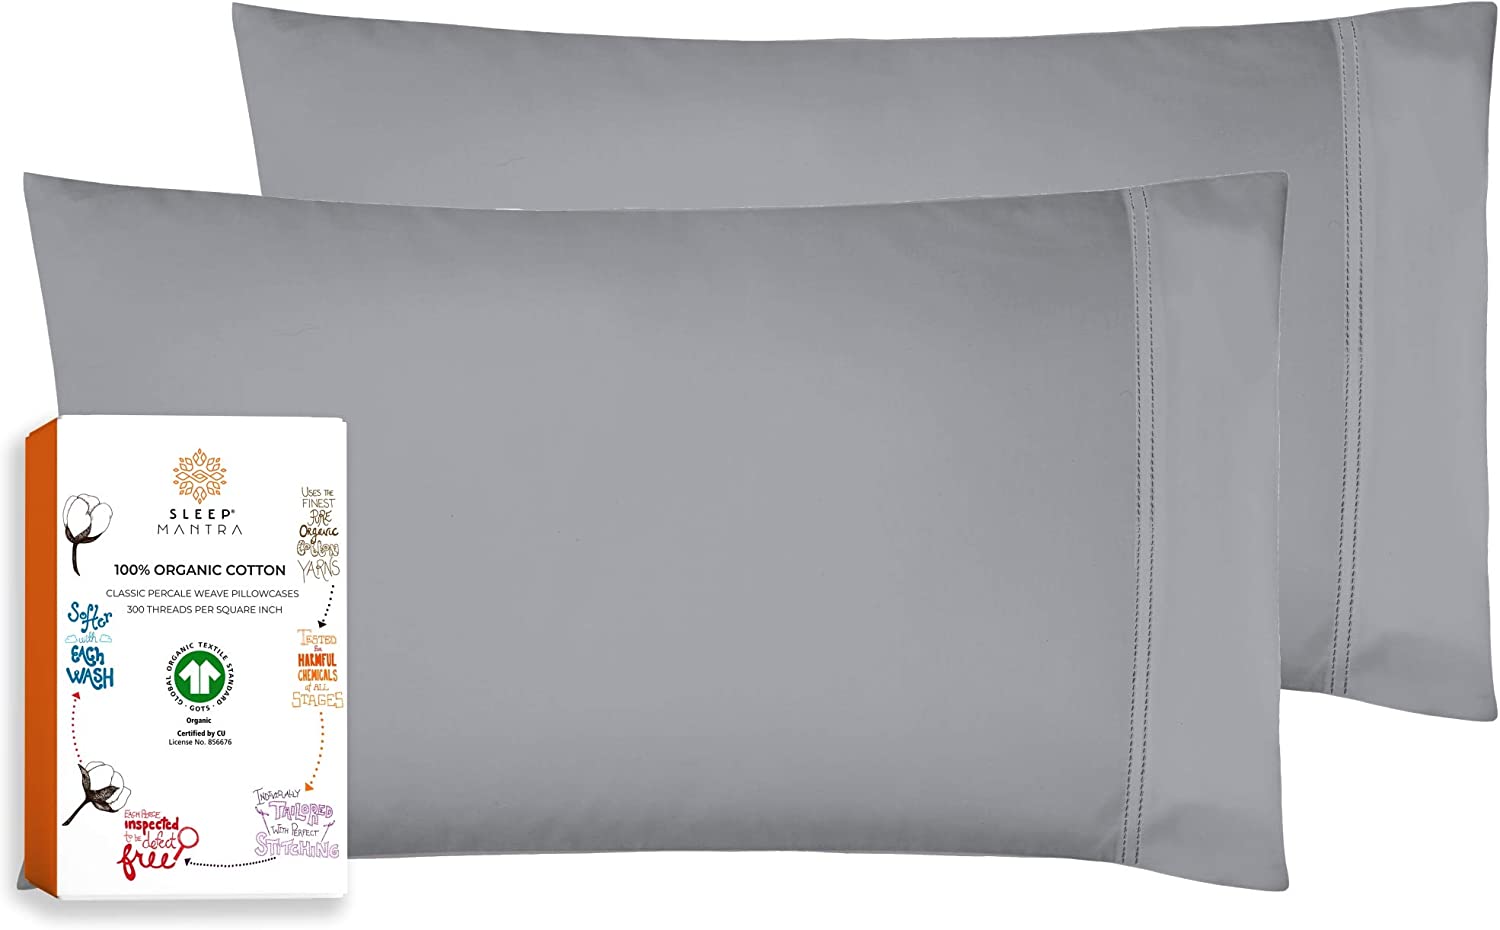  Sleep Mantra 100% Organic Cotton Bed Sheet Set - Crisp